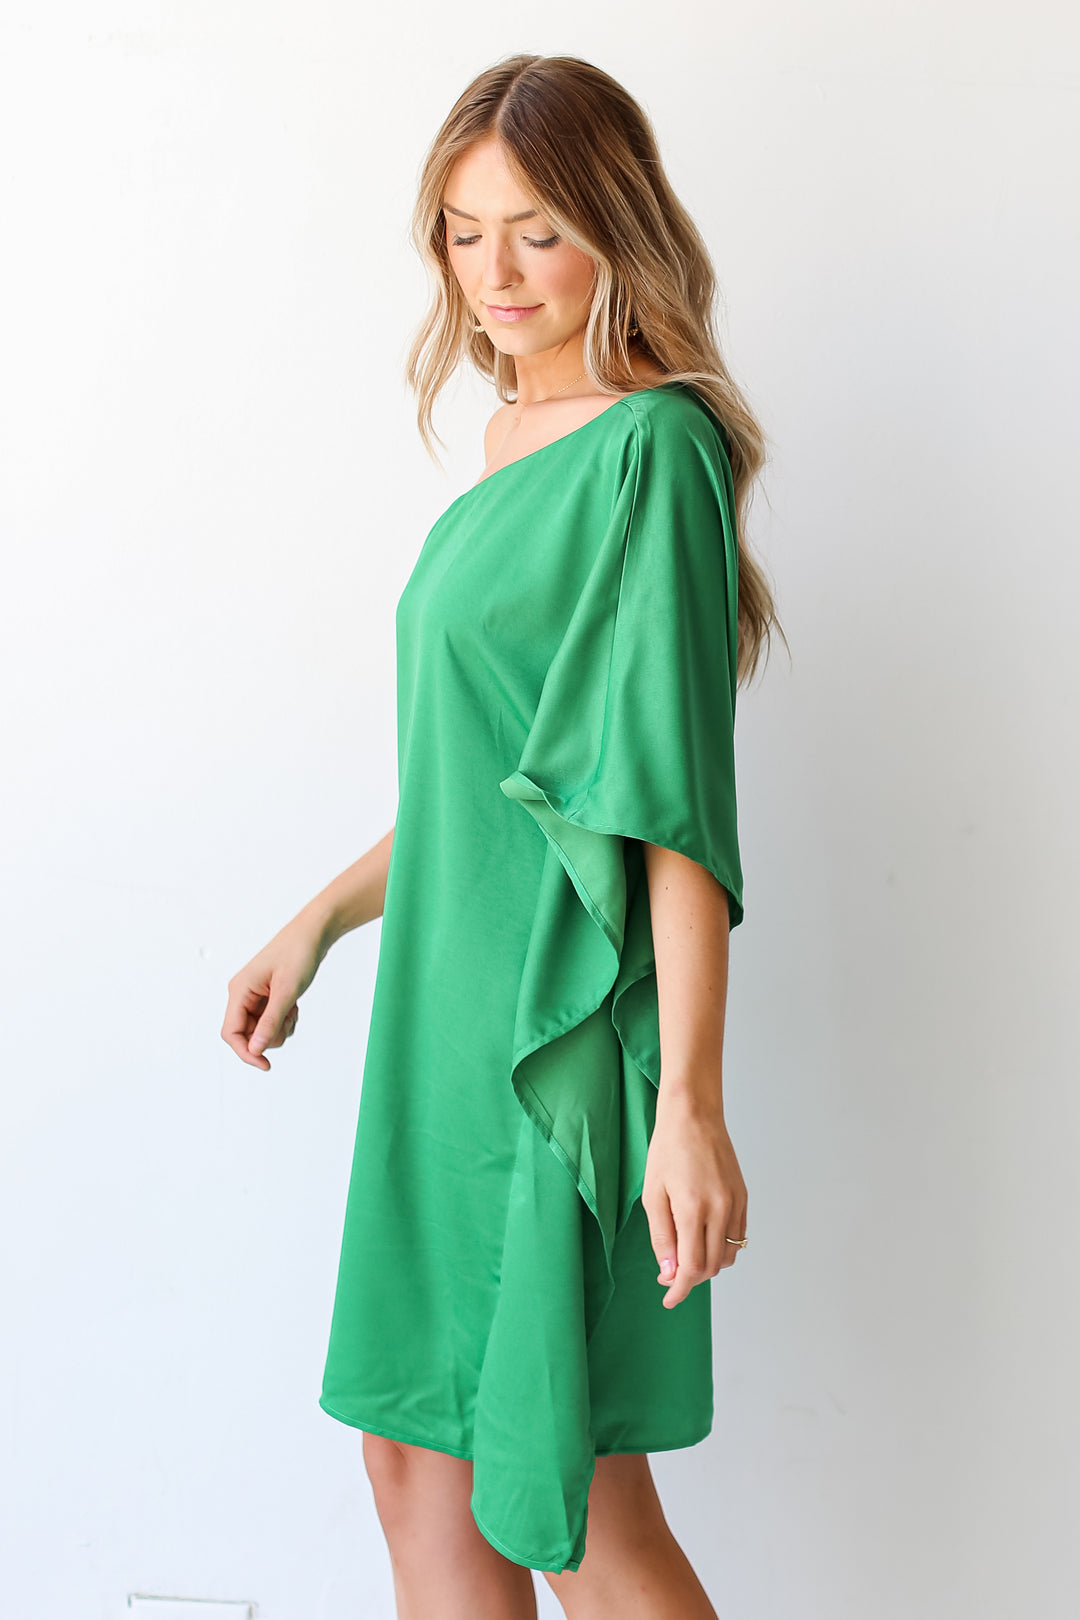 green One-Shoulder Mini Dress side view